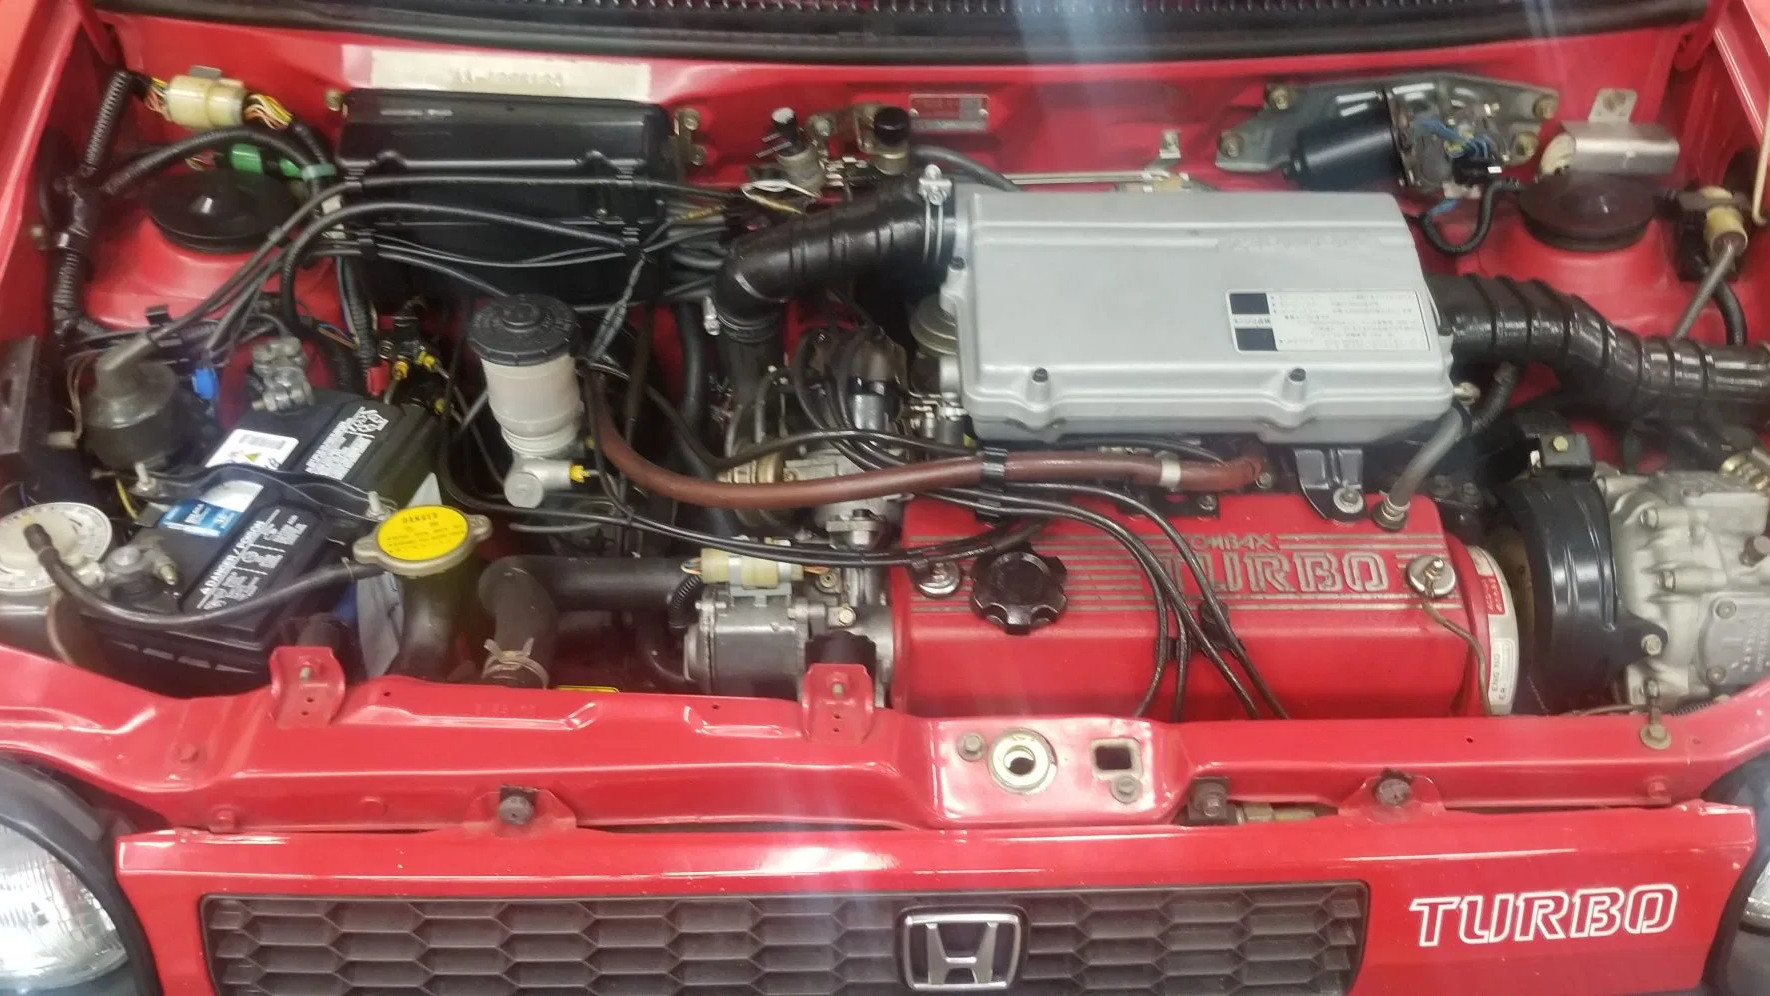 1983 Honda City Turbo engine